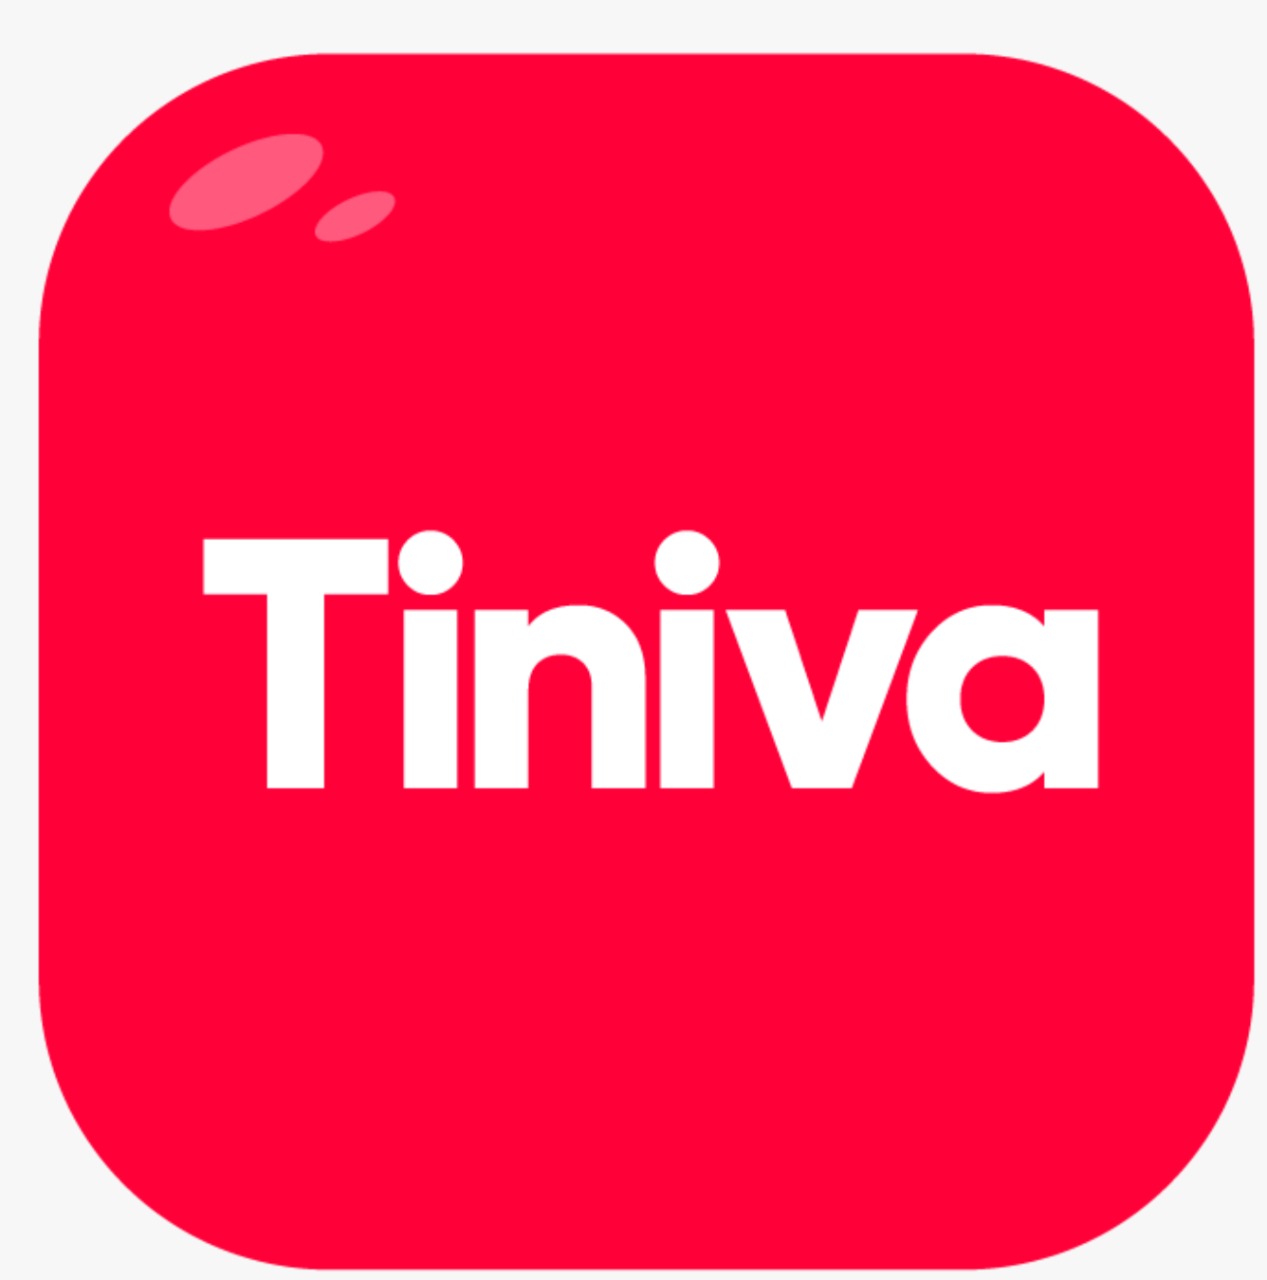 AxisRooms co-founder & ex-CEO, Anil Kumar Prasanna launches his venture Tiniva